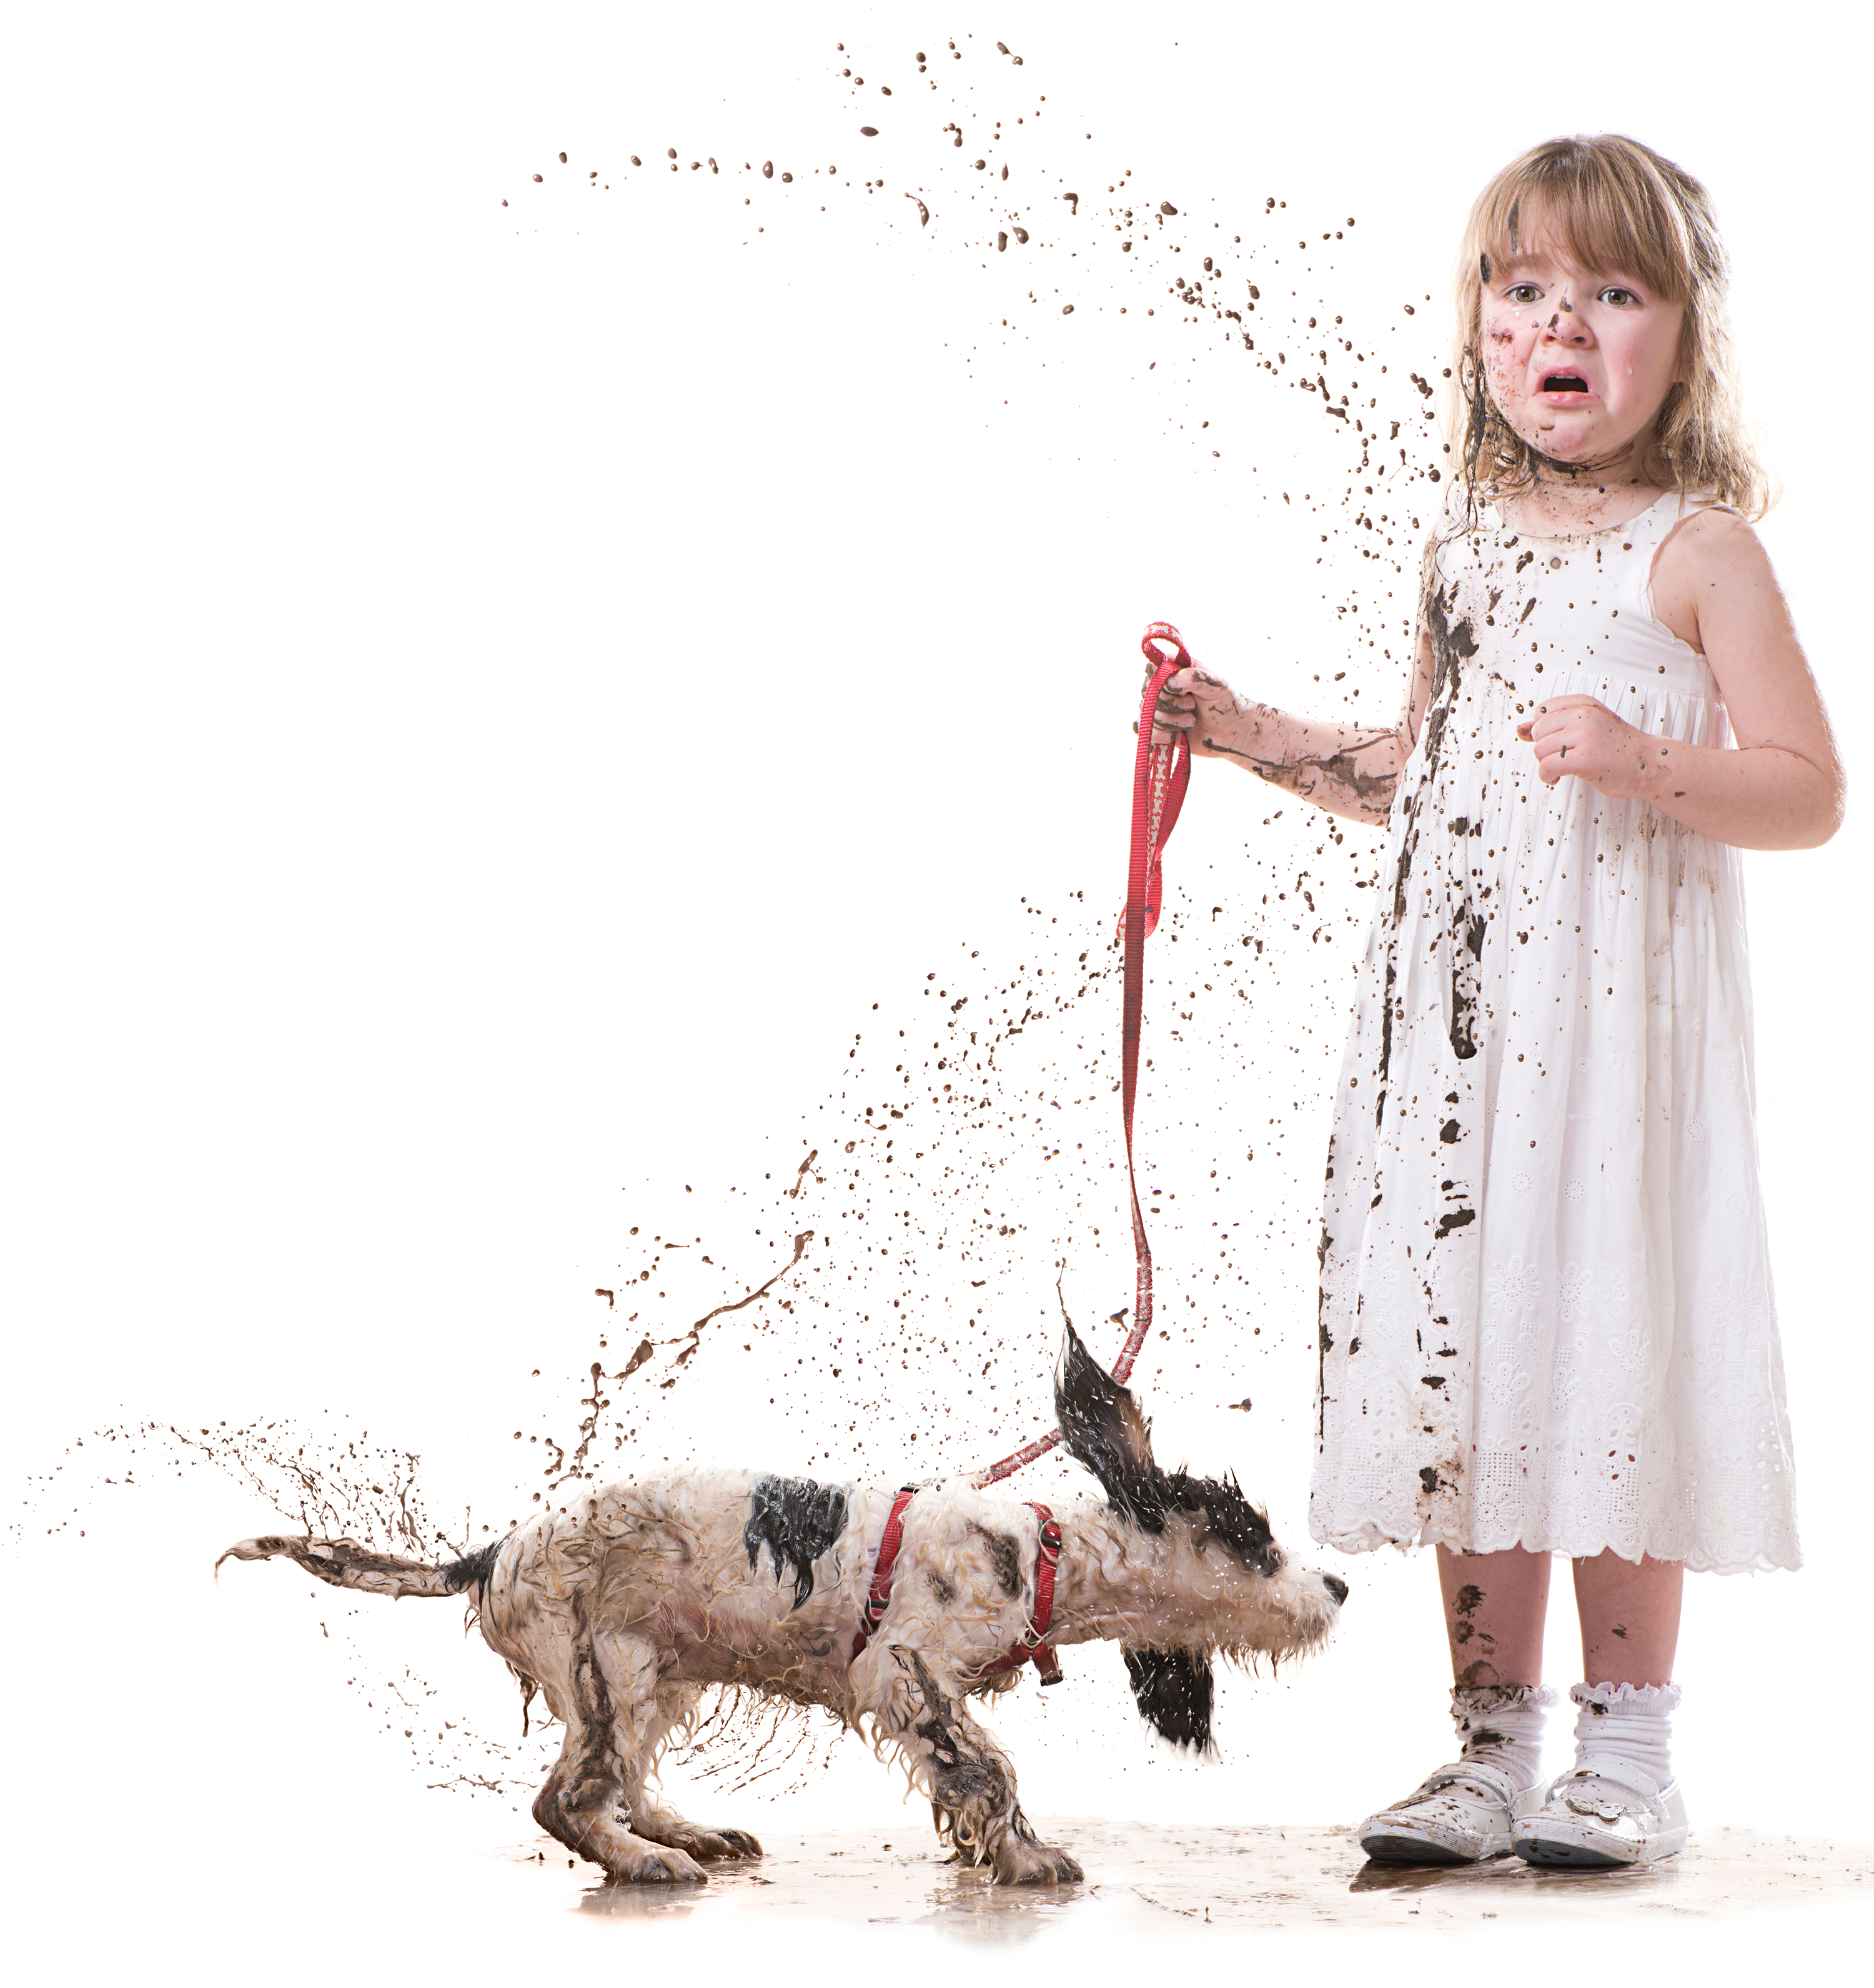 Dog splashing a girl with mud